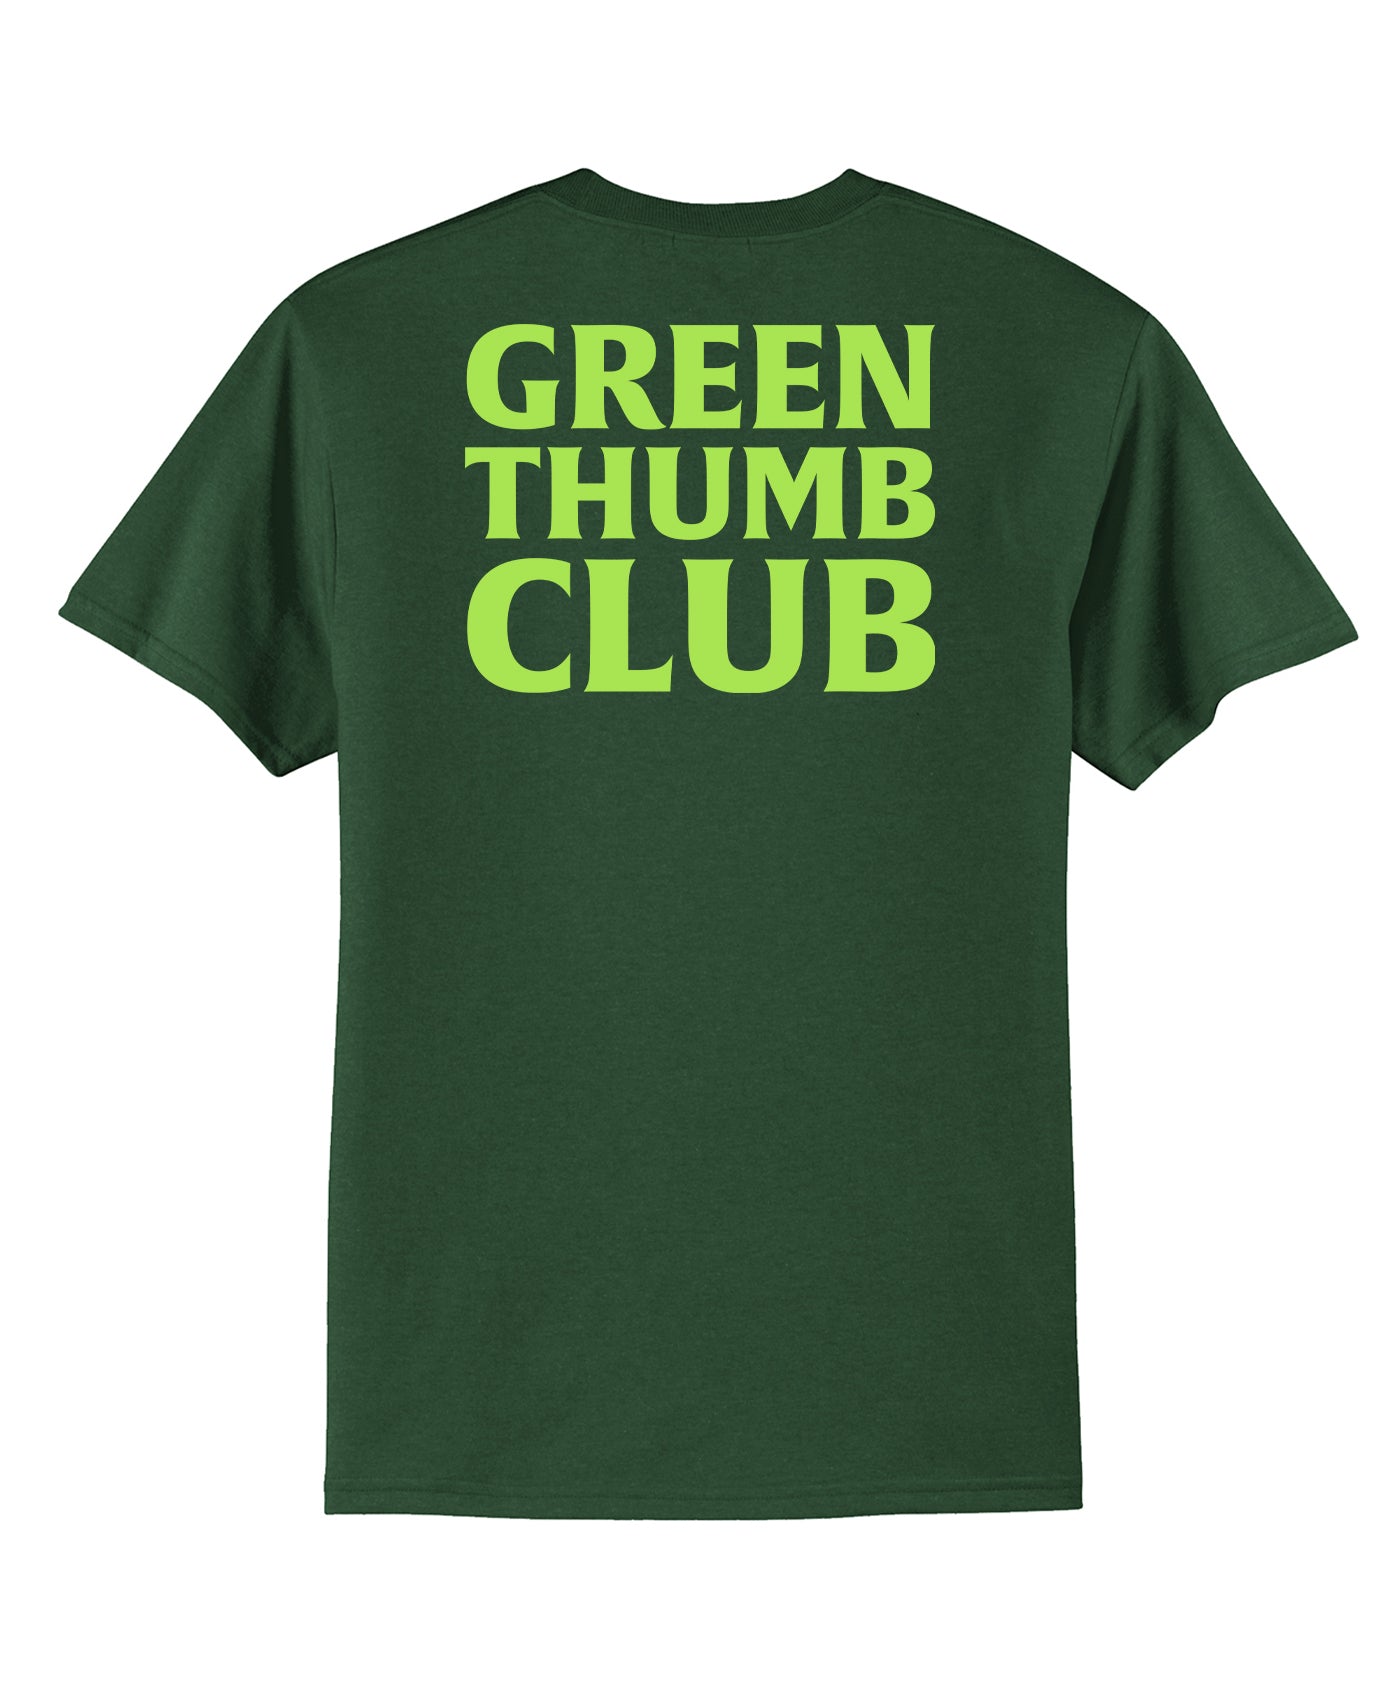 The Green Thumb Club Tee